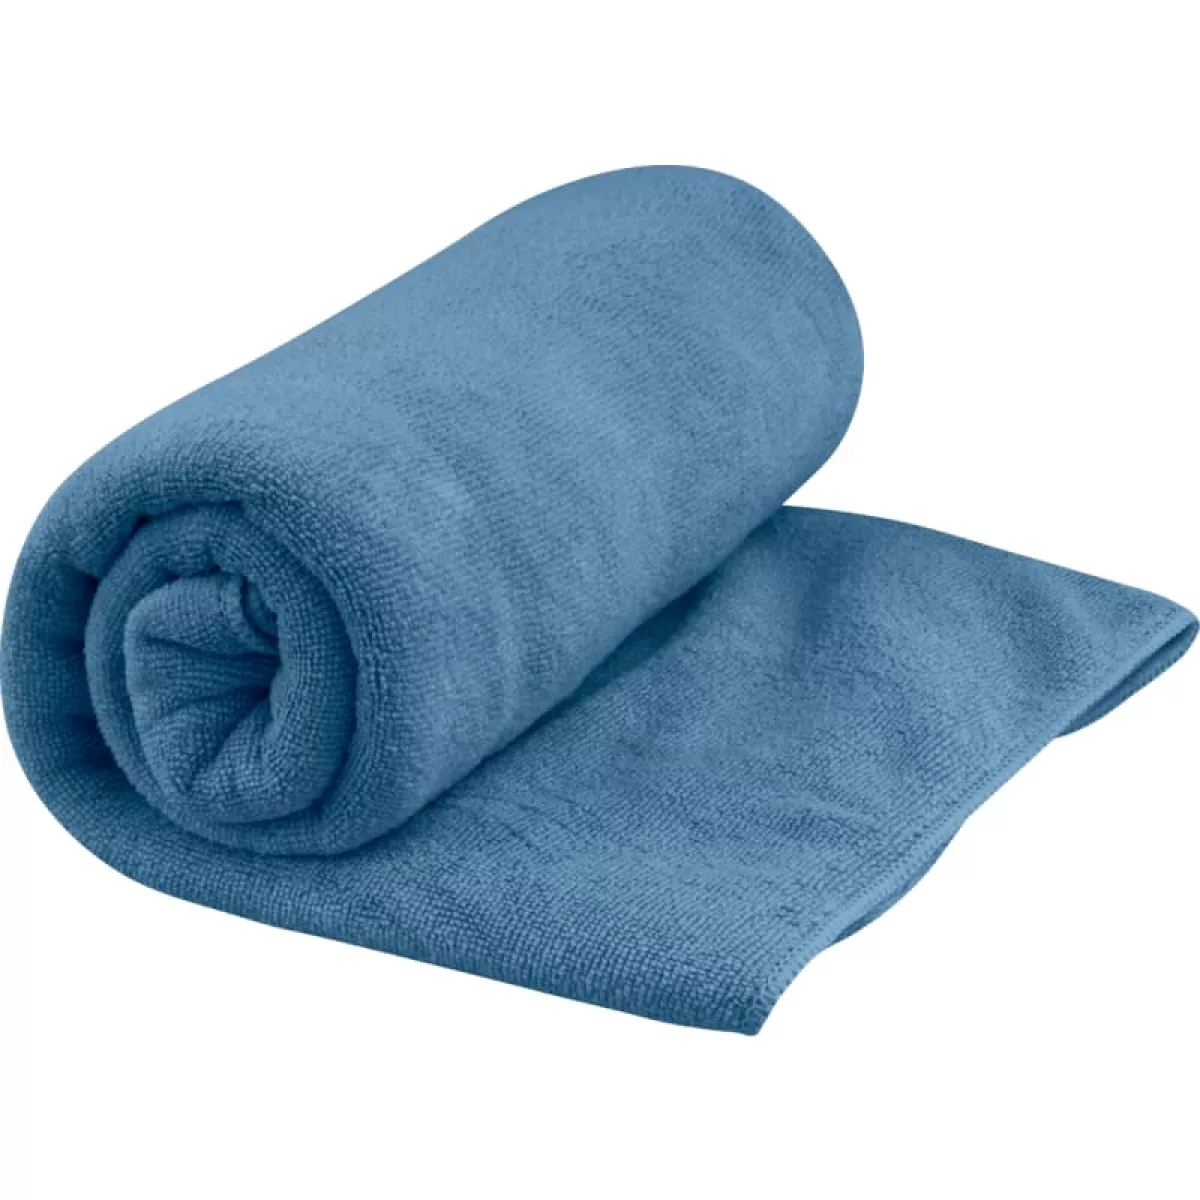 #3 - Sea to Summit Tek towel M / håndklæde, 50 x100 cm, moonlight blue - Håndklæde, personlig pleje